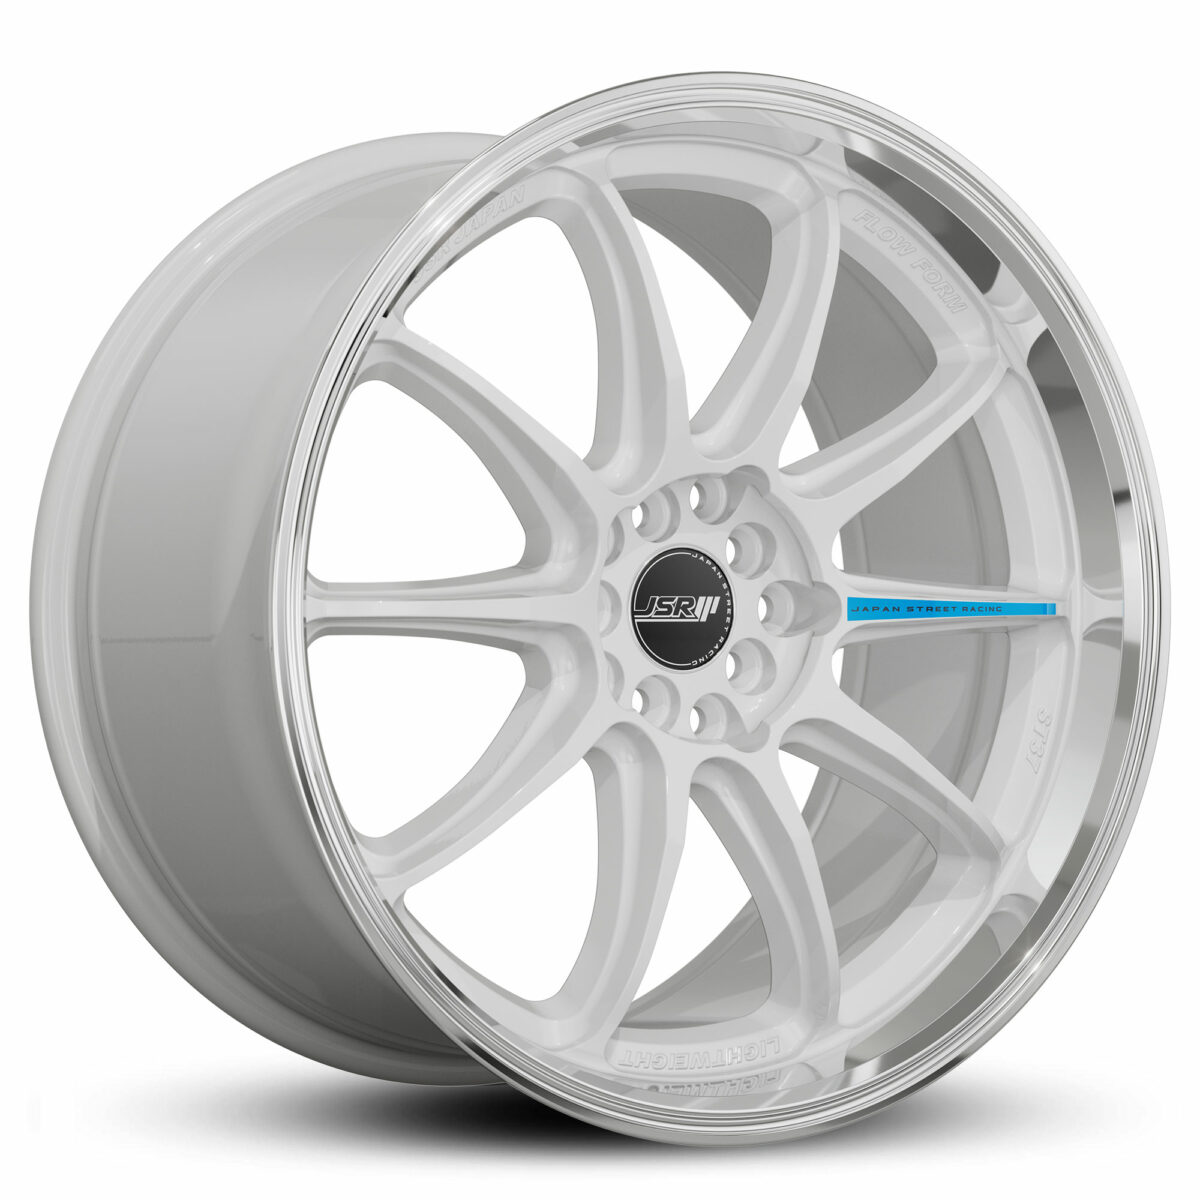 Japan Racing Wheels Flow Form JSR ST37 Gloss White Machined Lip JDM Rims 18 Inch 19 Inch Alloys